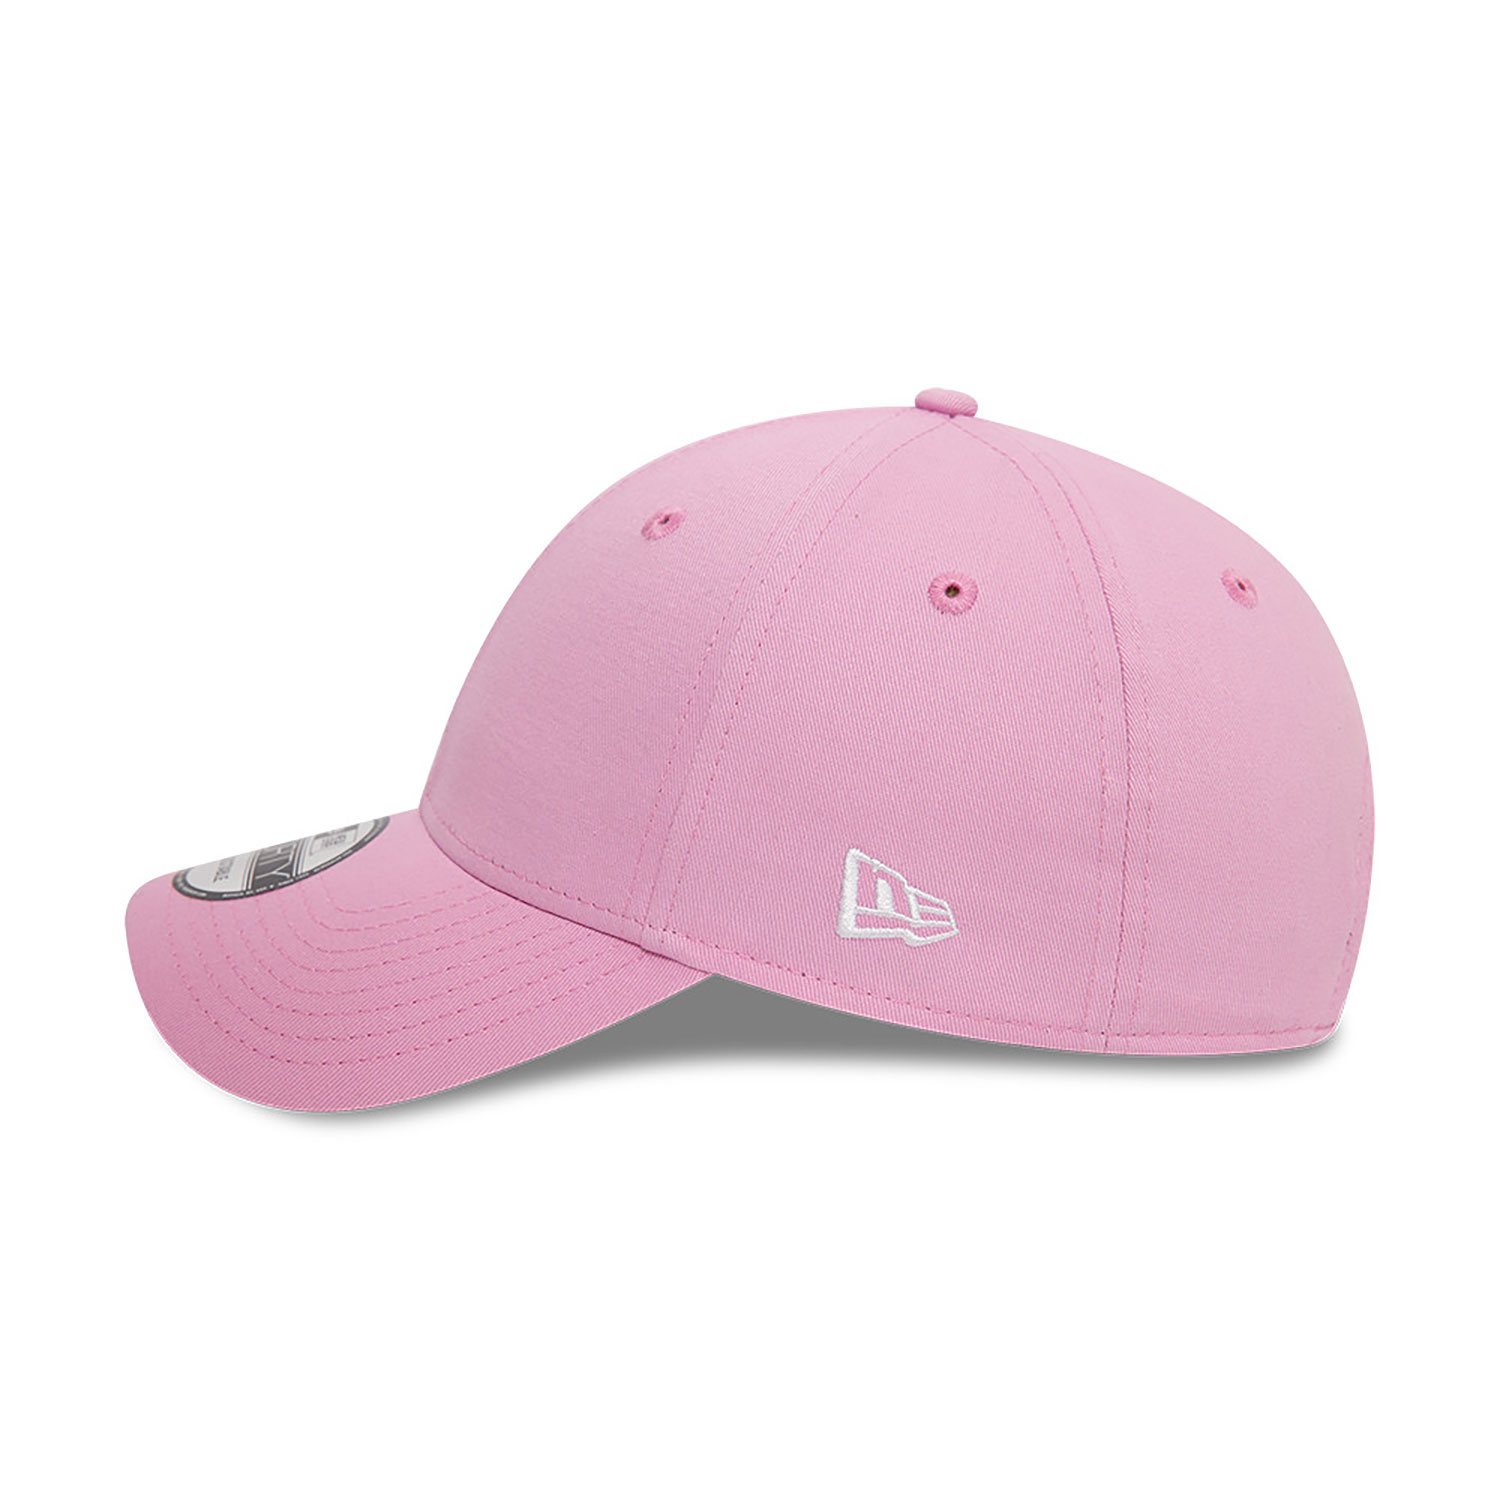 New Era Essential Pink 9FORTY Adjustable Cap